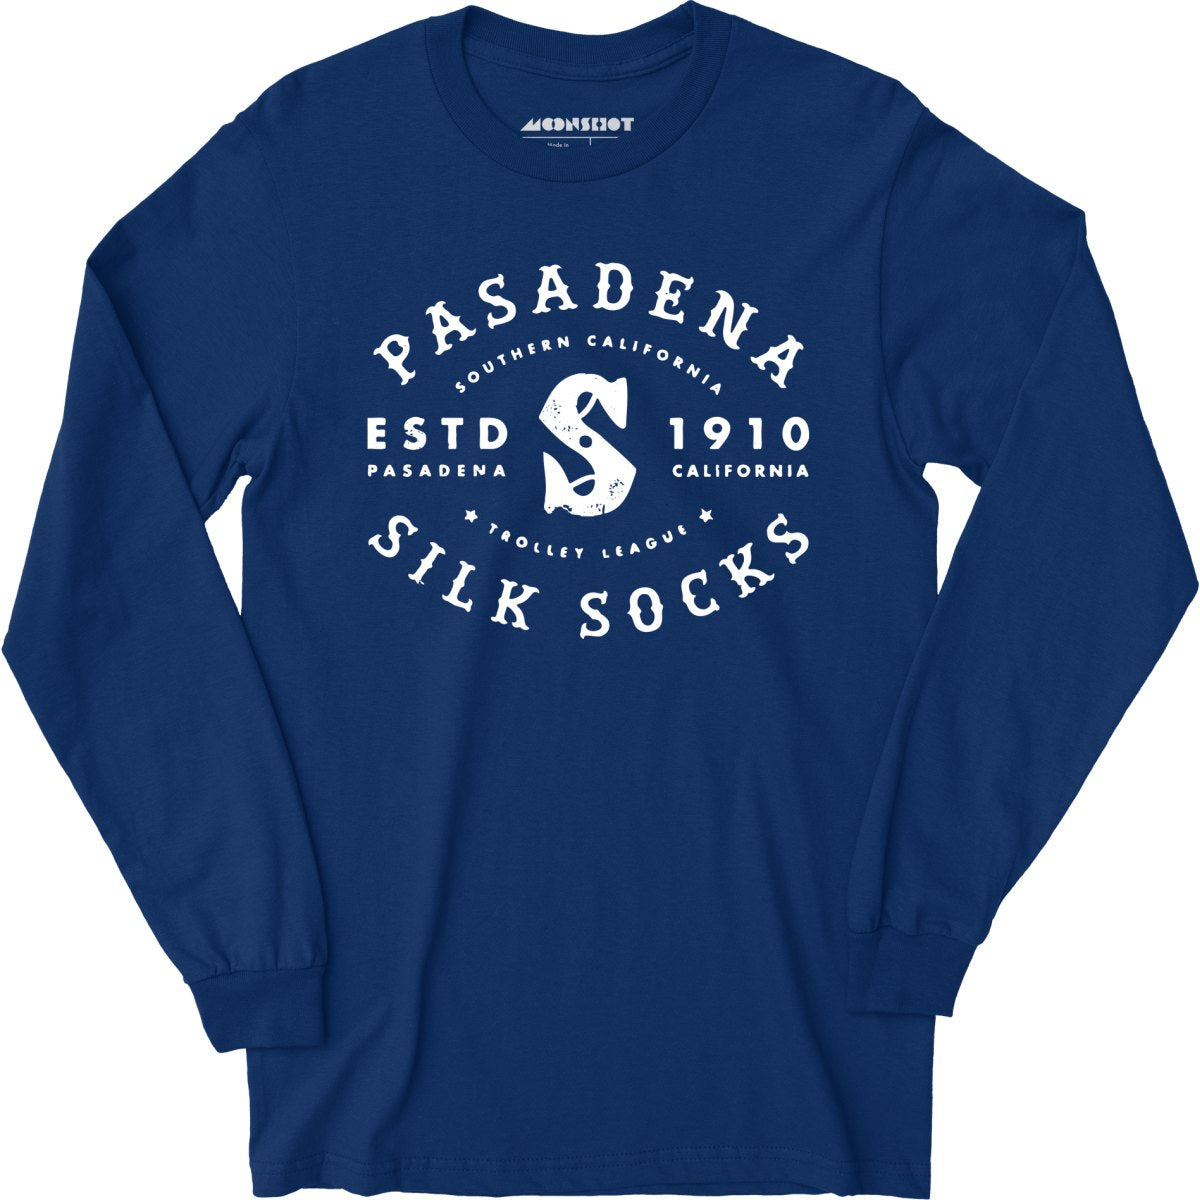 Pasadena Silk Socks - California - Vintage Defunct Baseball Teams - Long Sleeve T-Shirt